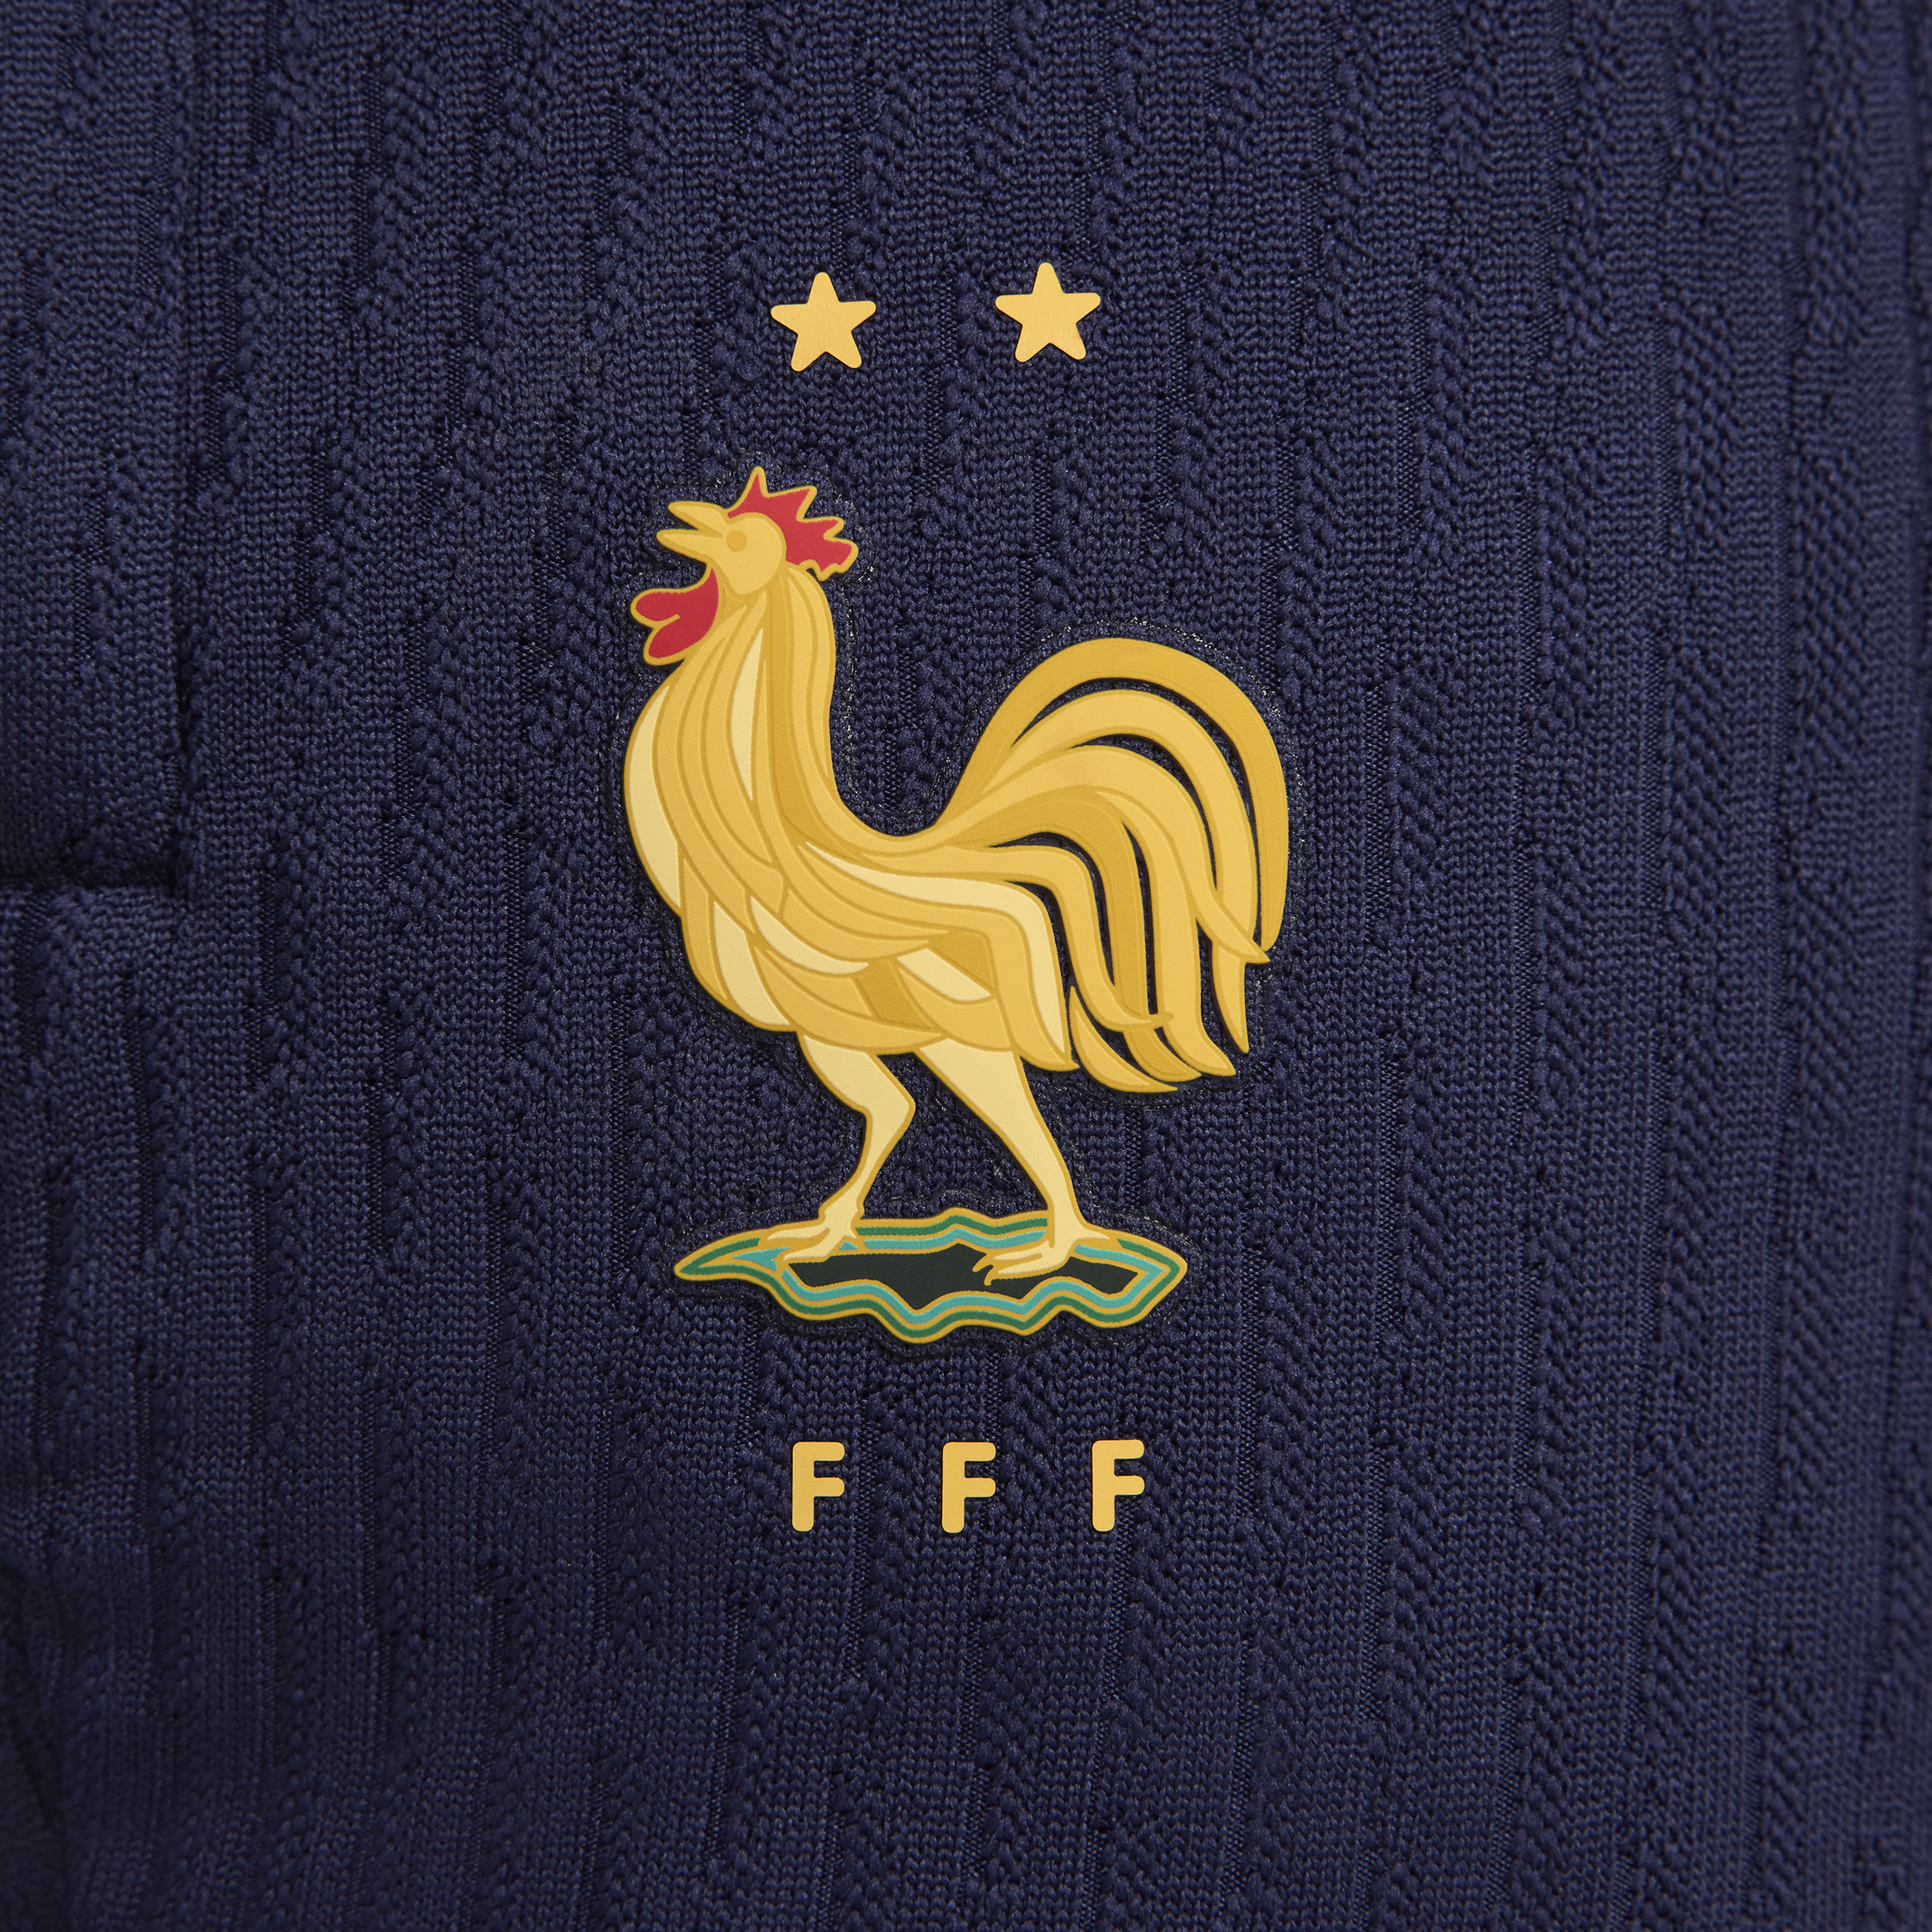 Nike FFF Strike Elite Dri-FIT ADV knit voetbalbroek voor heren Blauw